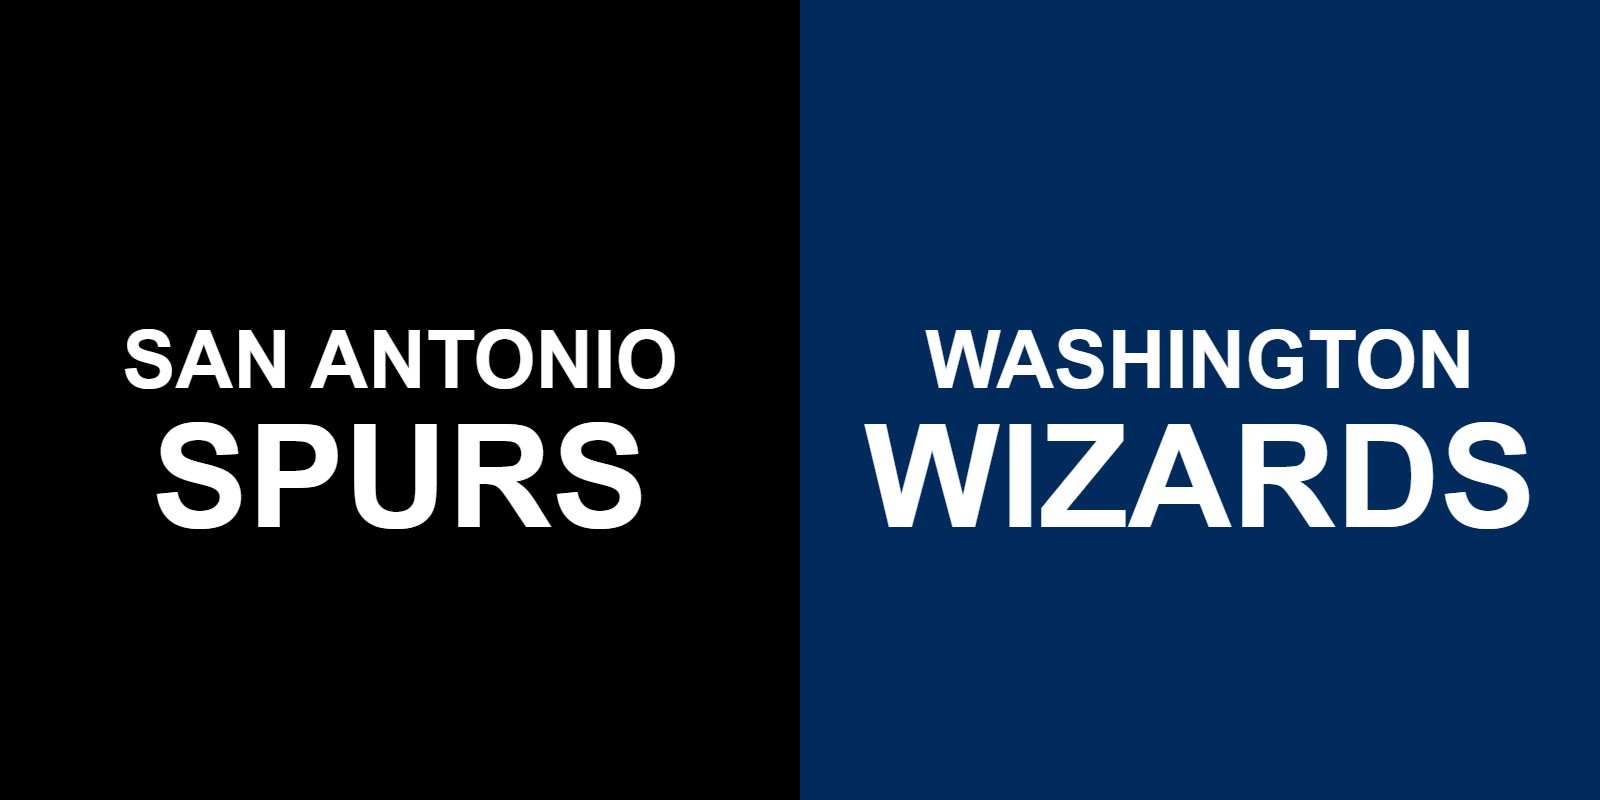 Spurs vs Wizards